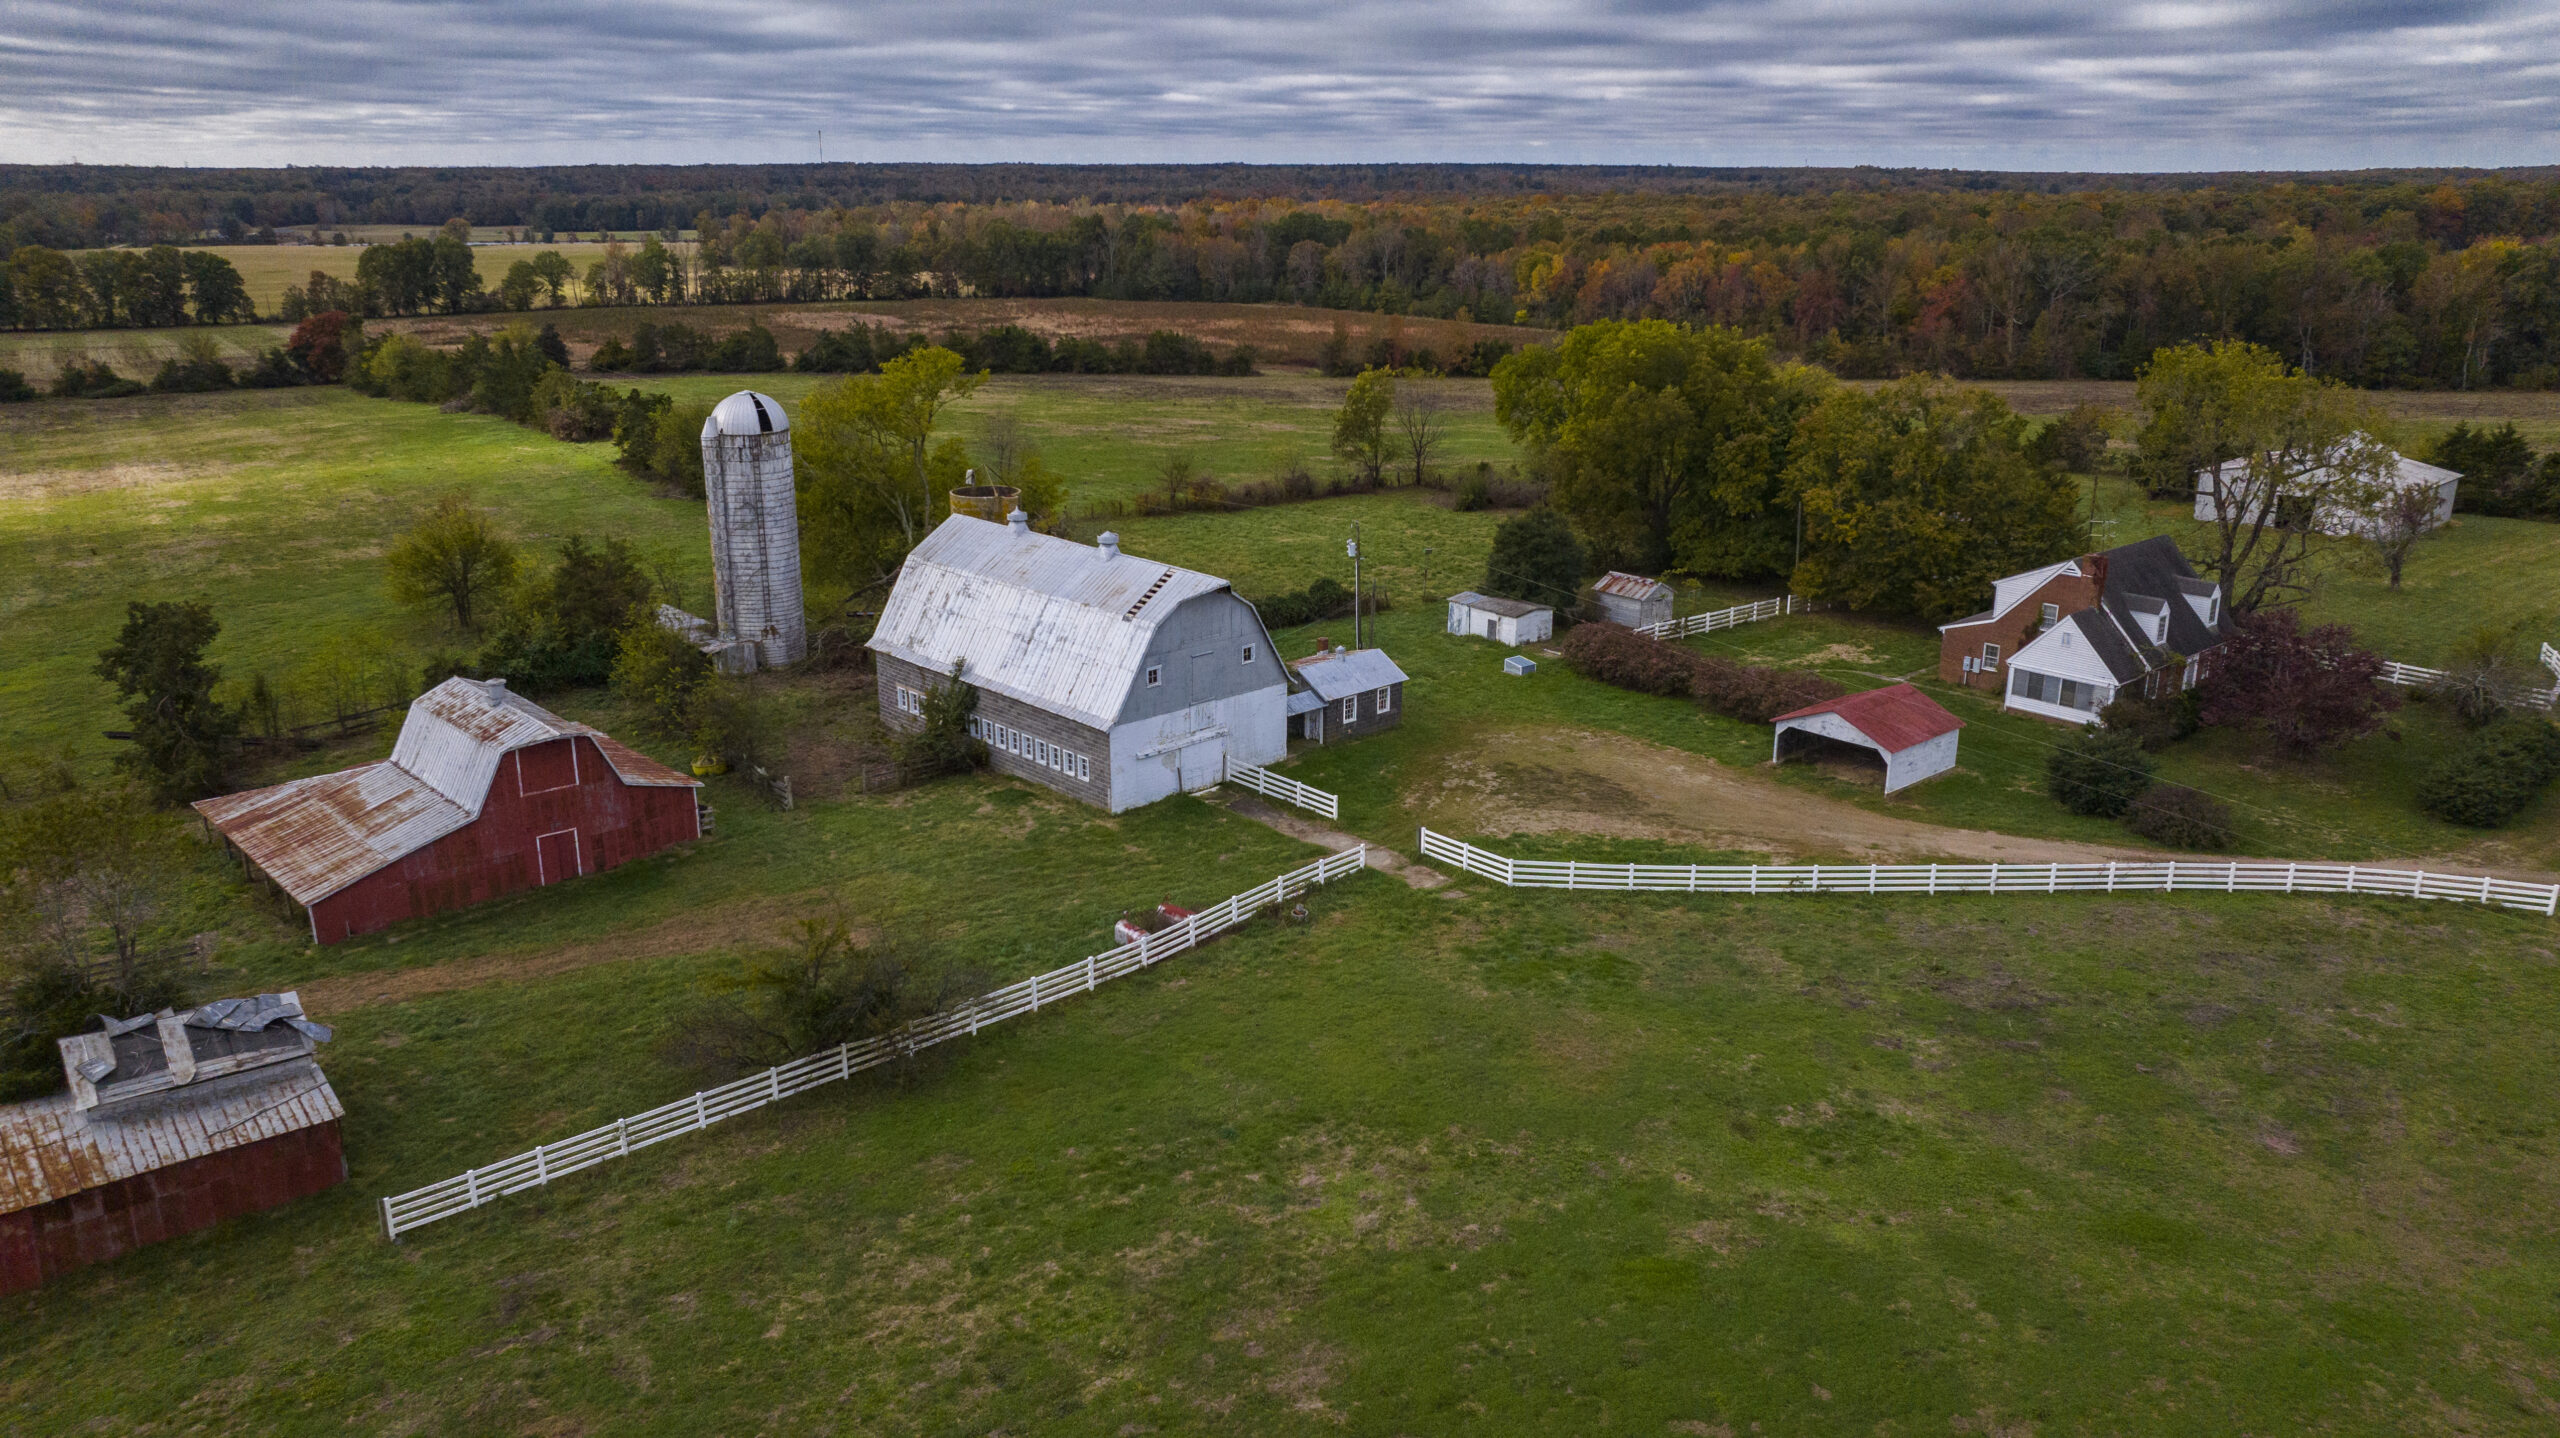 Farm with barns and silos dot the Thornburg Virginia landscape near where Stonewall Jackson died